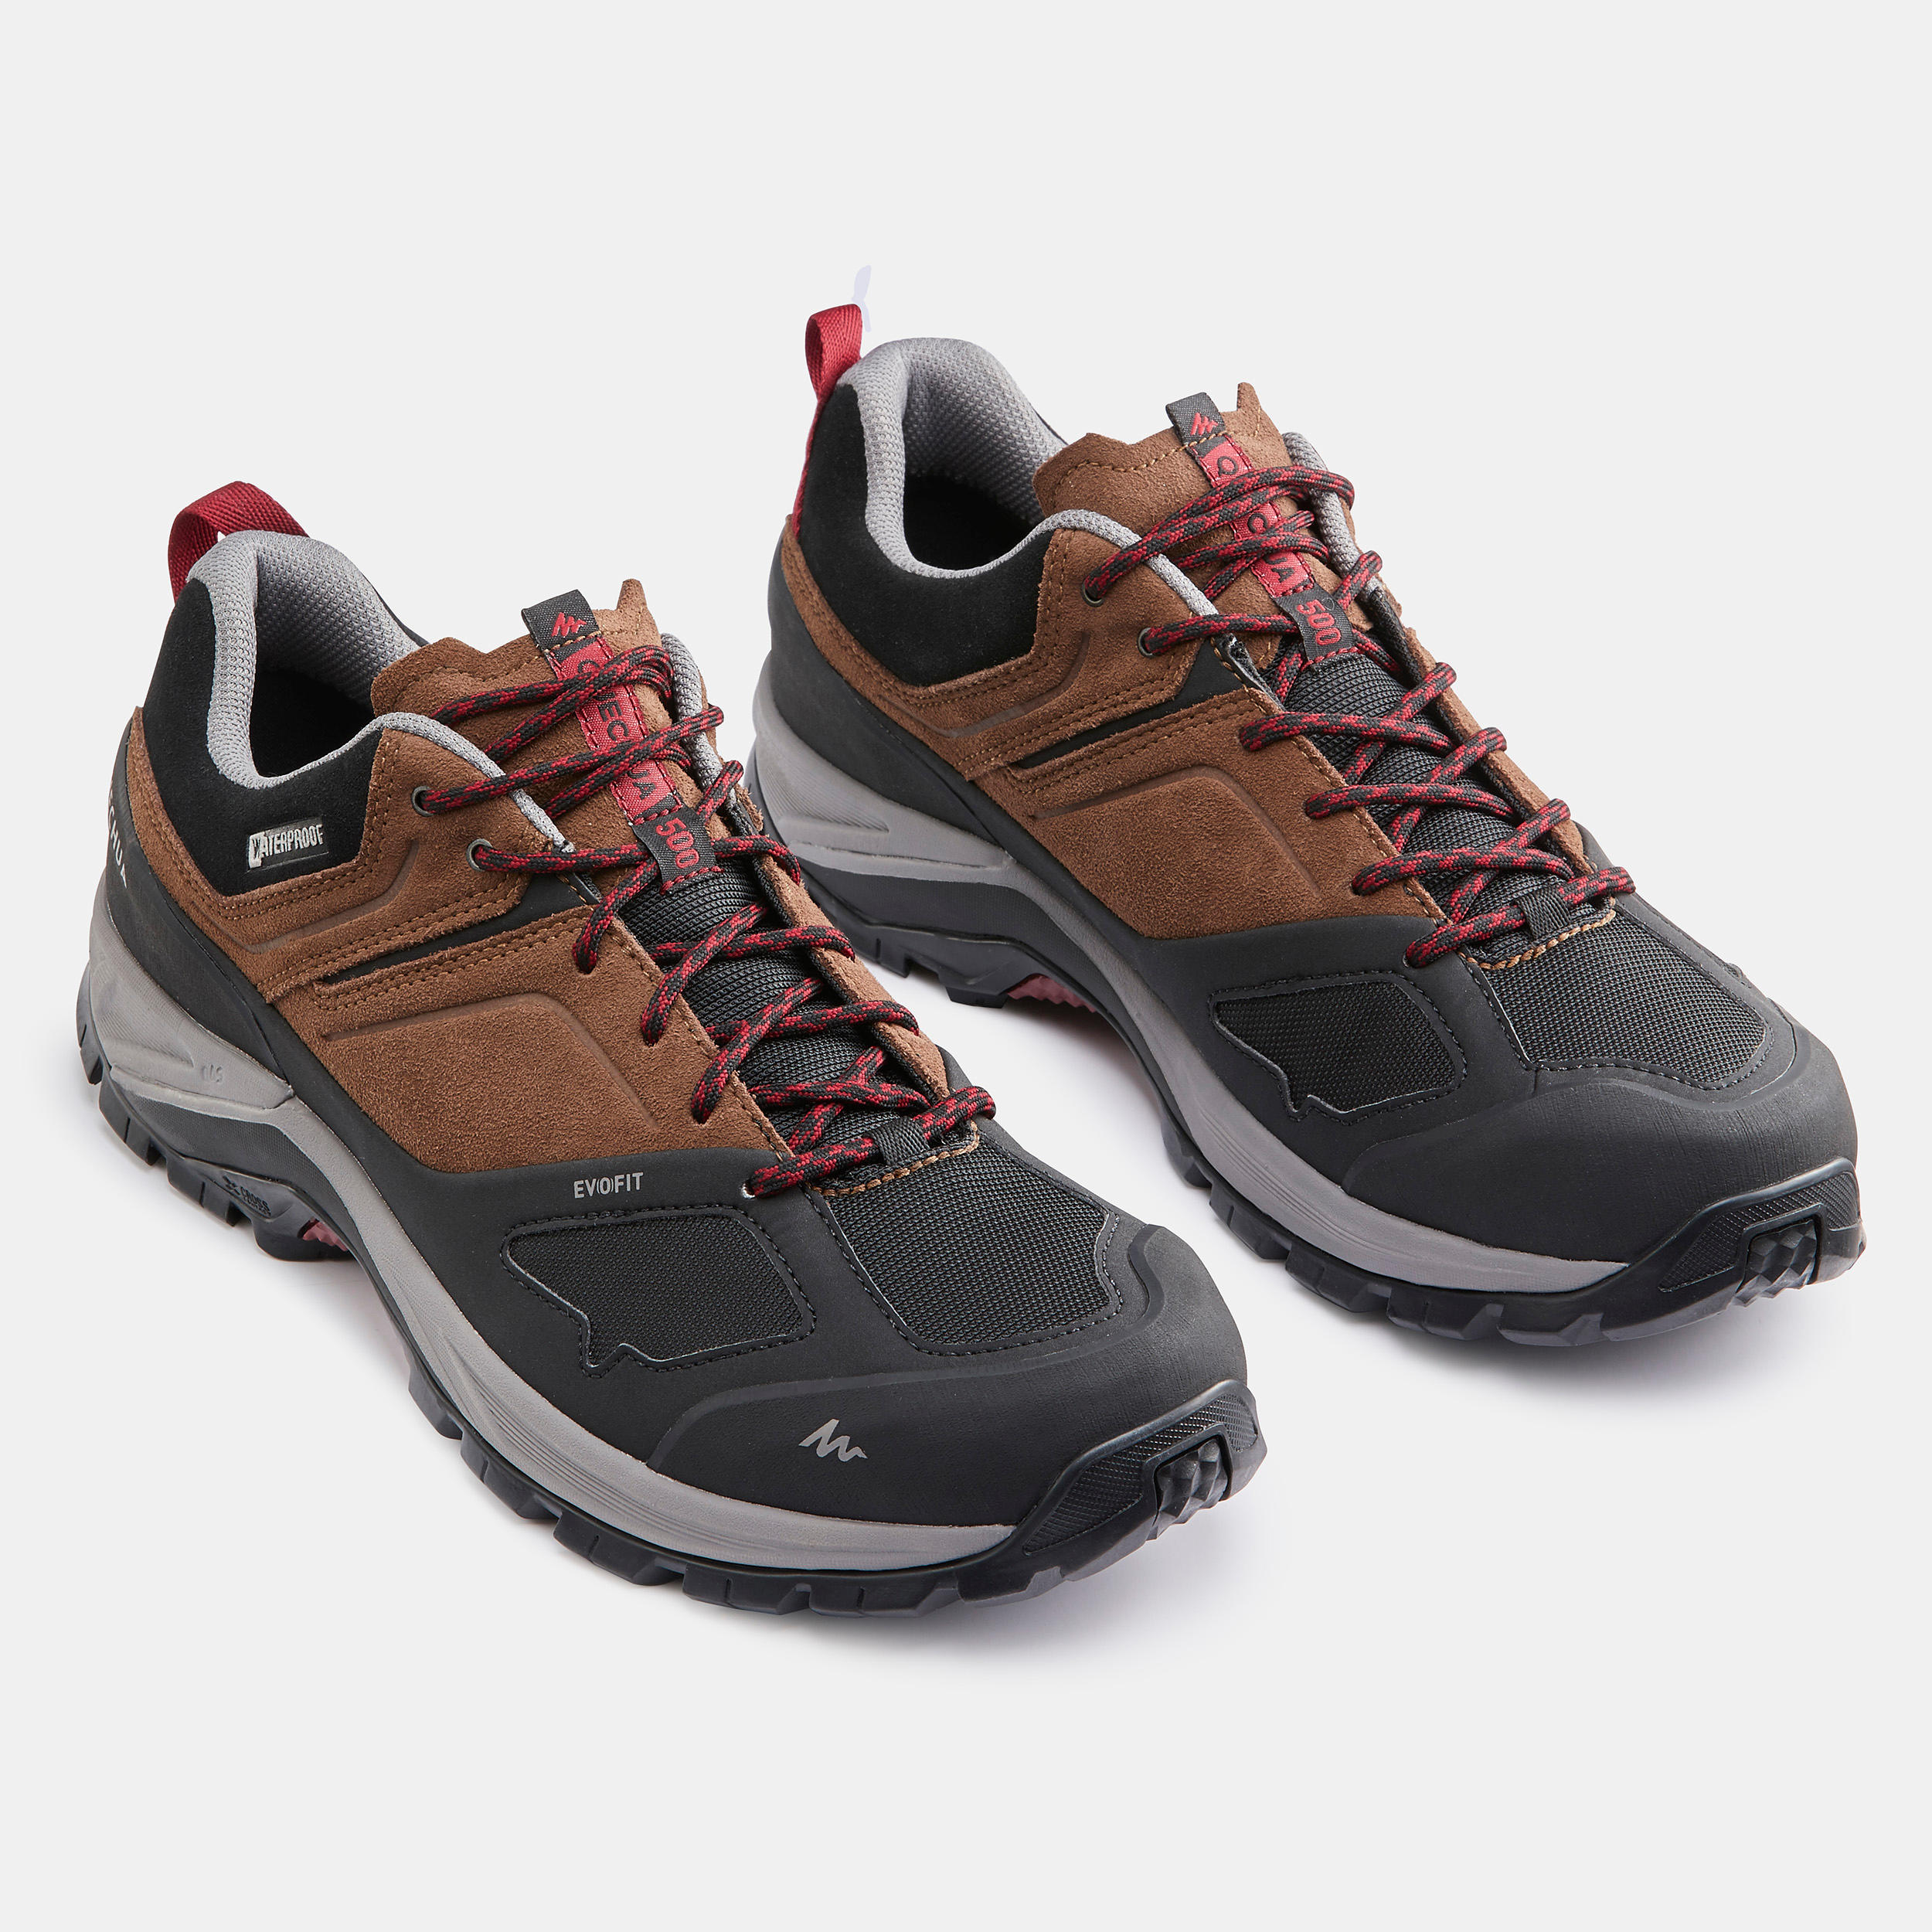 Men's waterproof mountain hiking shoes - MH500 - Brown 5/7